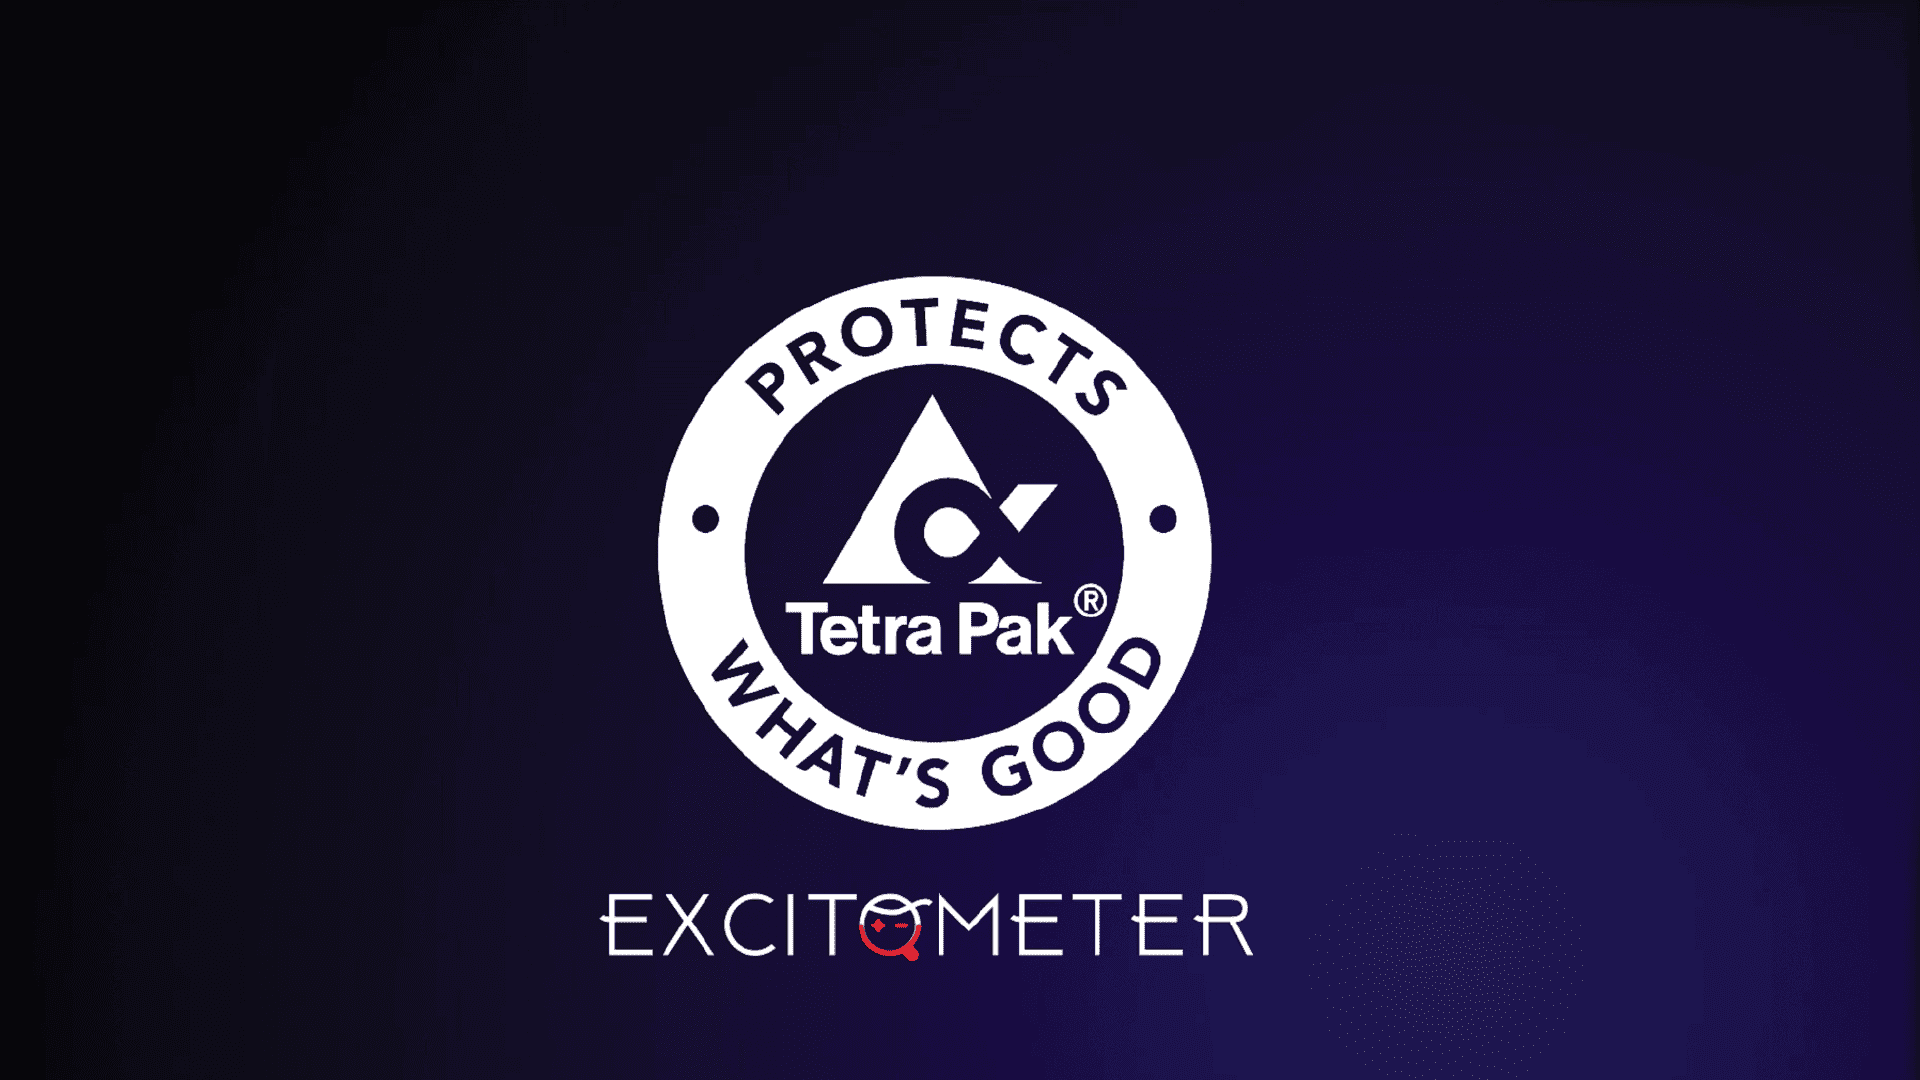  Excitometer-Tetra Pak